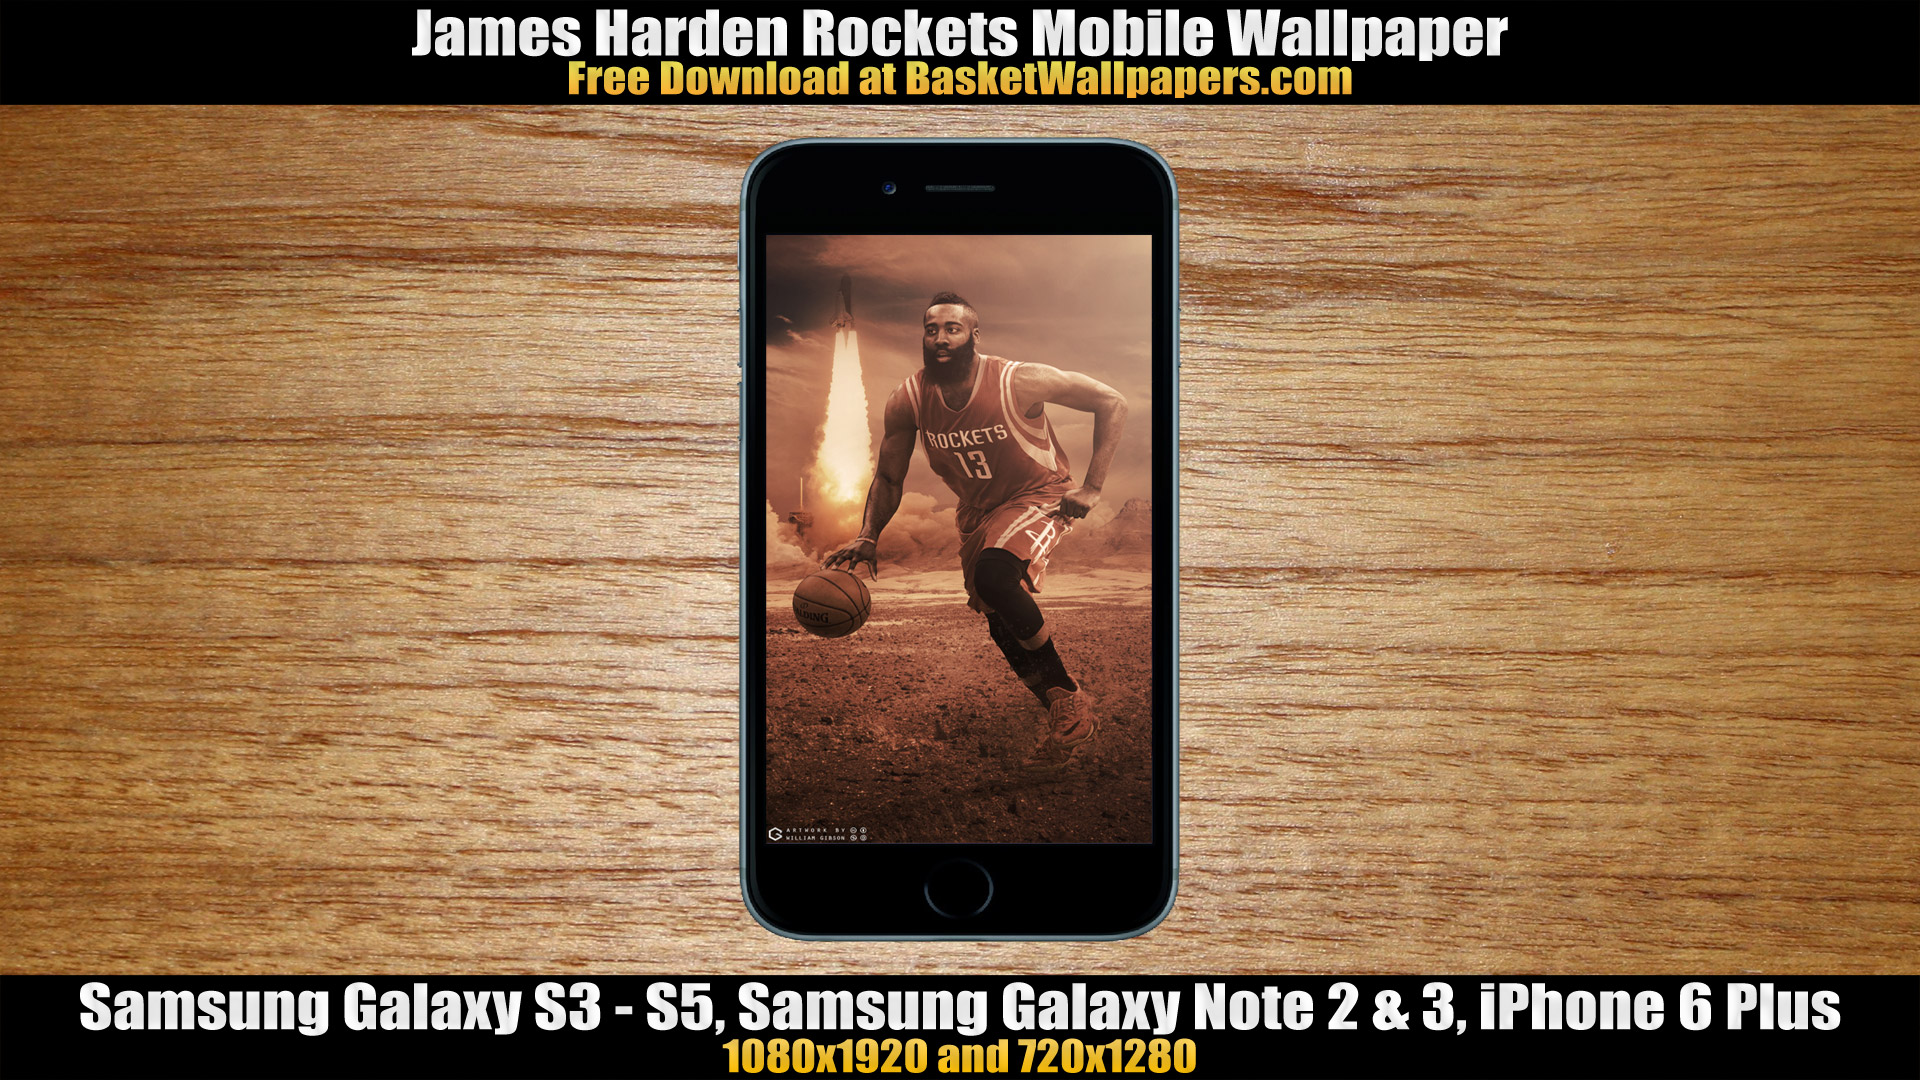 James Harden Rockets Mobile Wallpaper